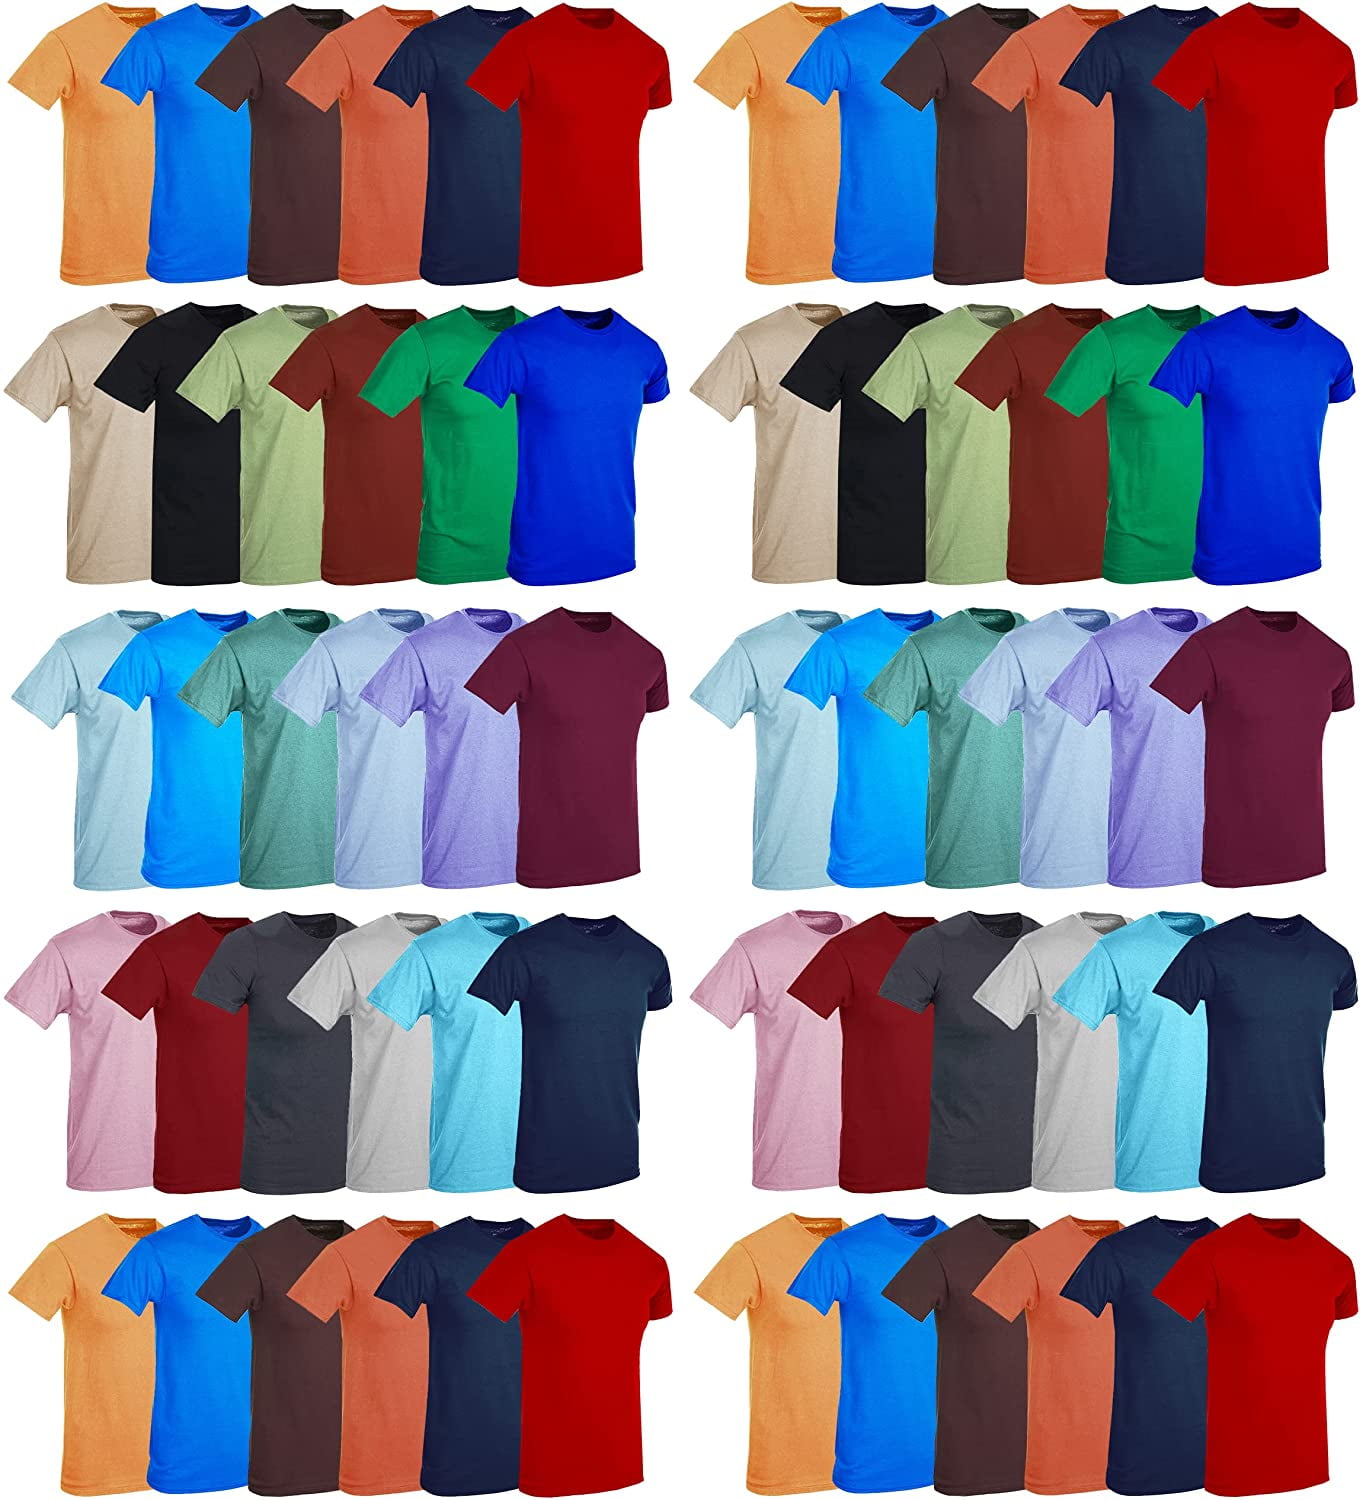 60 of Bulk Mens Cotton Crew Tshirts, Assorted Wholesale Sleeve Tee (60 Pack Mens Tshirts Pack B, Small) - Walmart.com